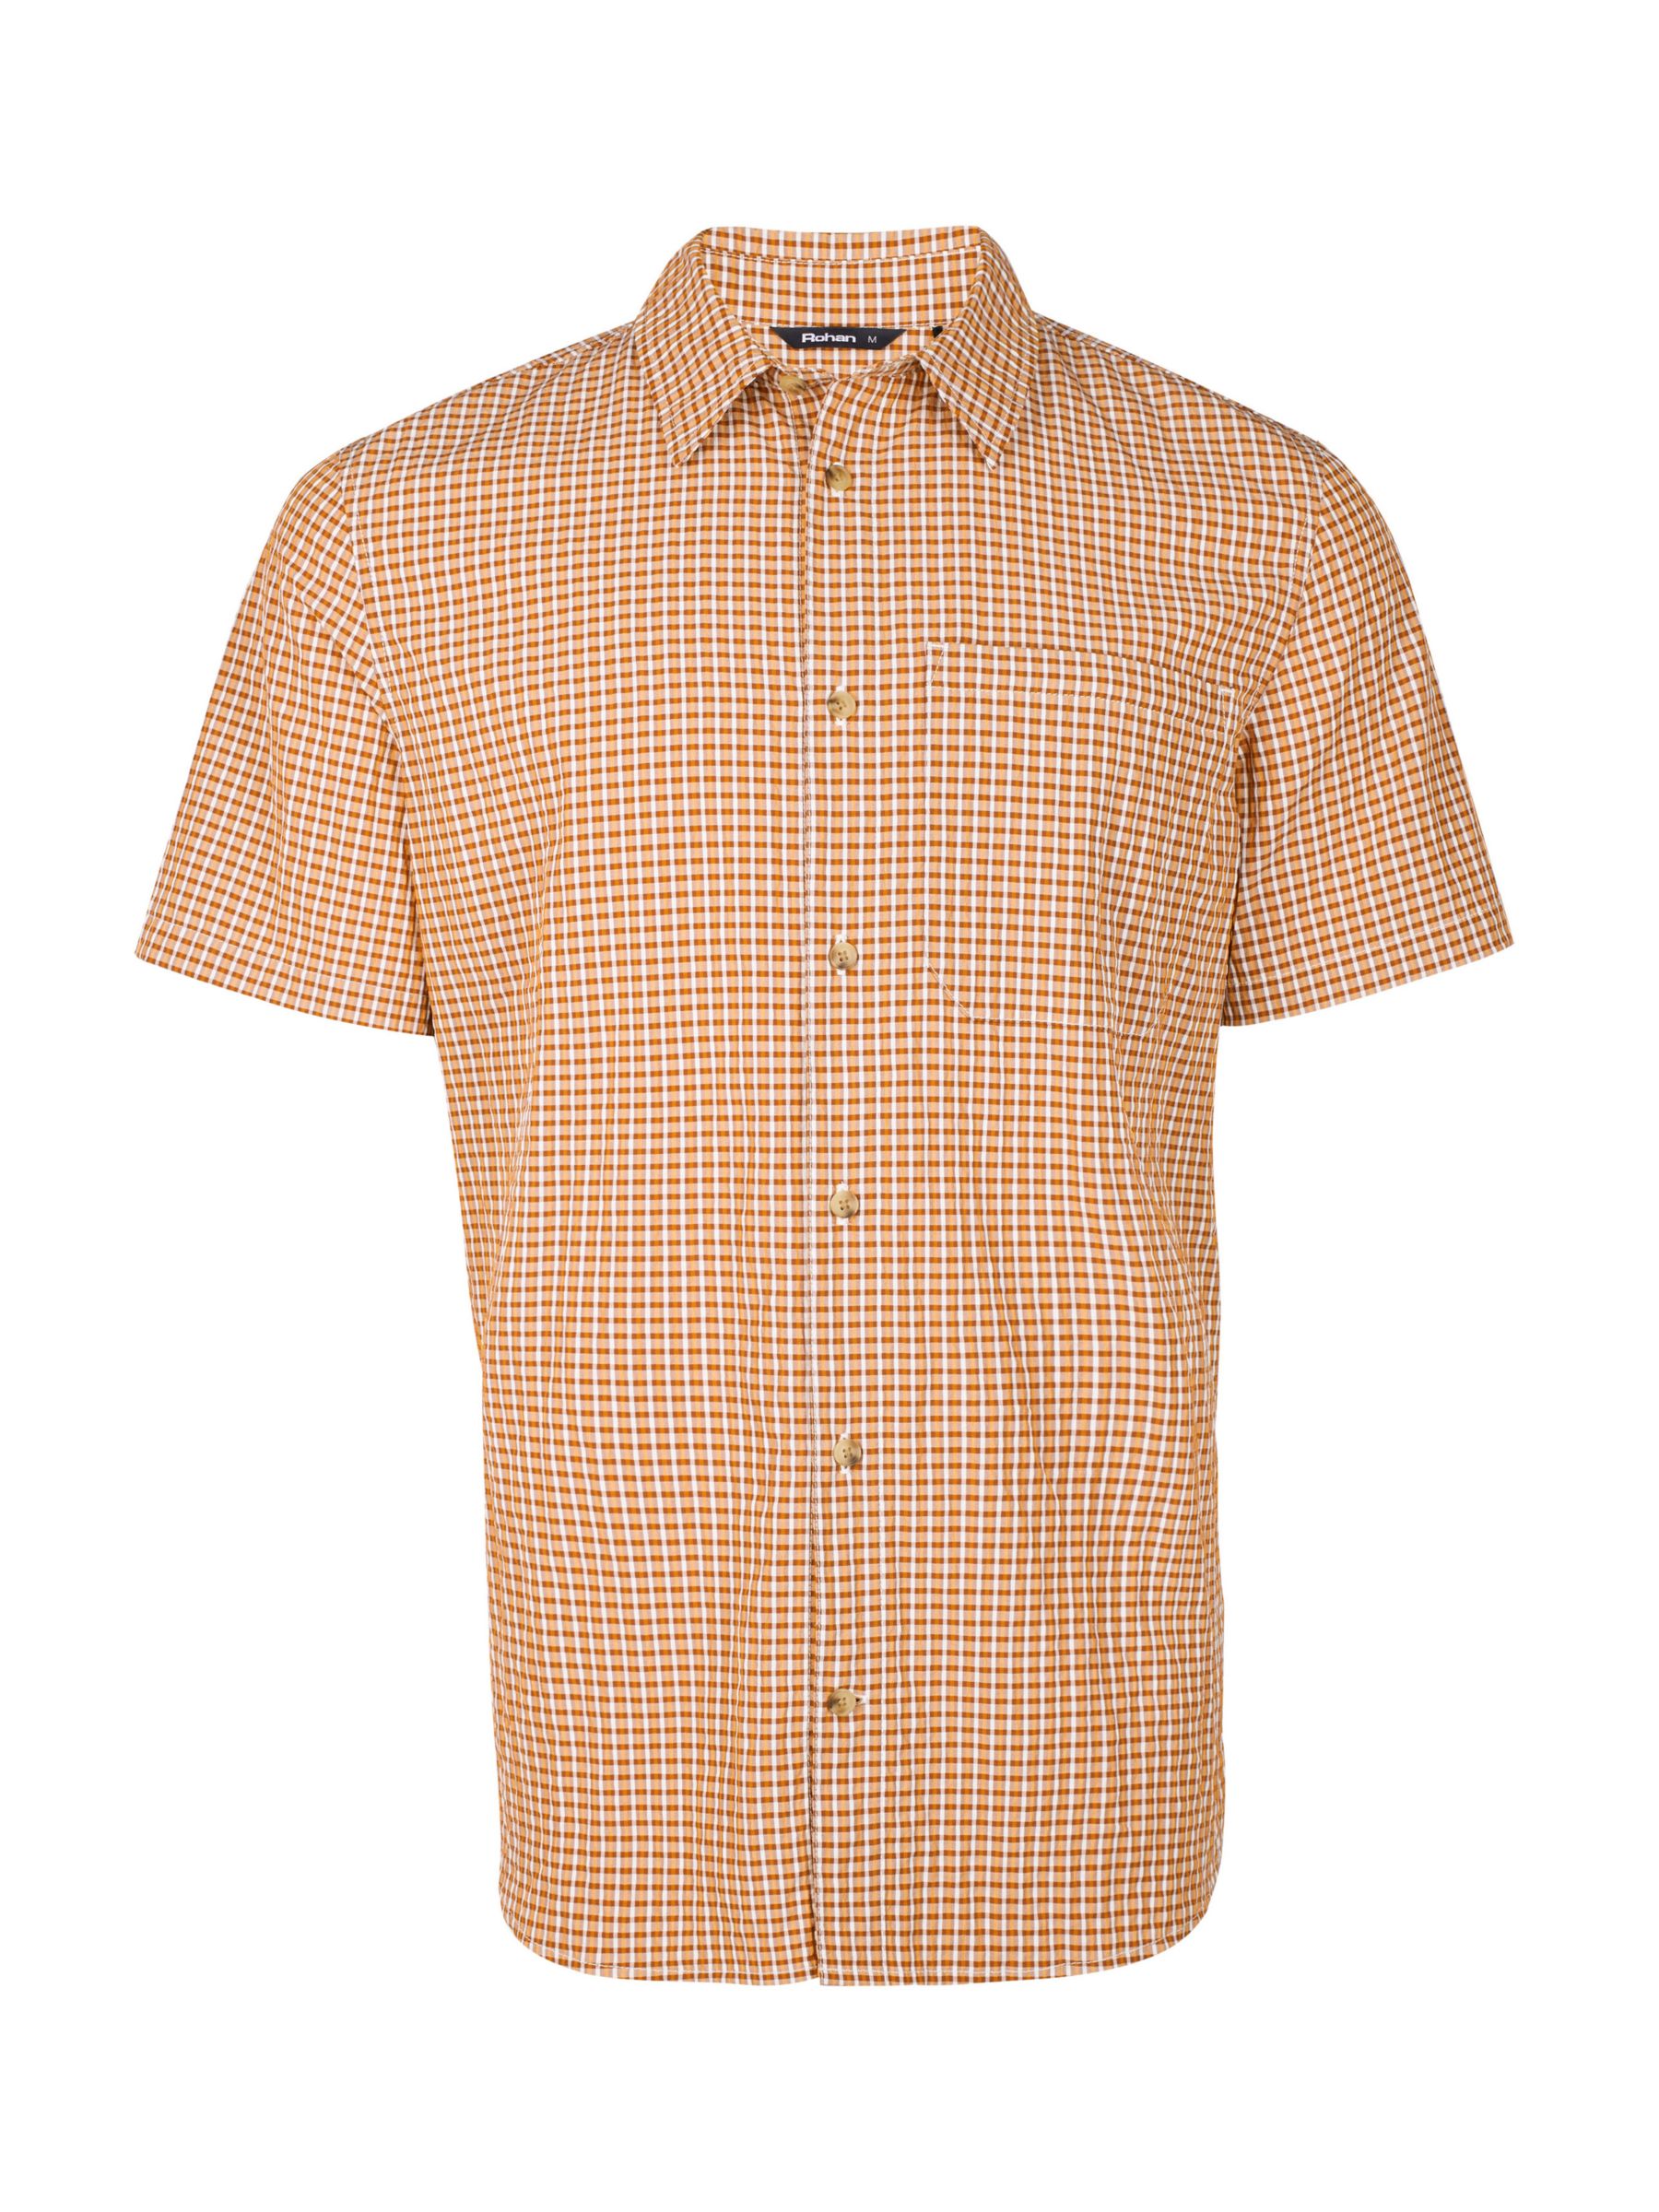 Rohan Isle Short Sleeve Seersucker Gingham Shirt, Sunset Orange, S